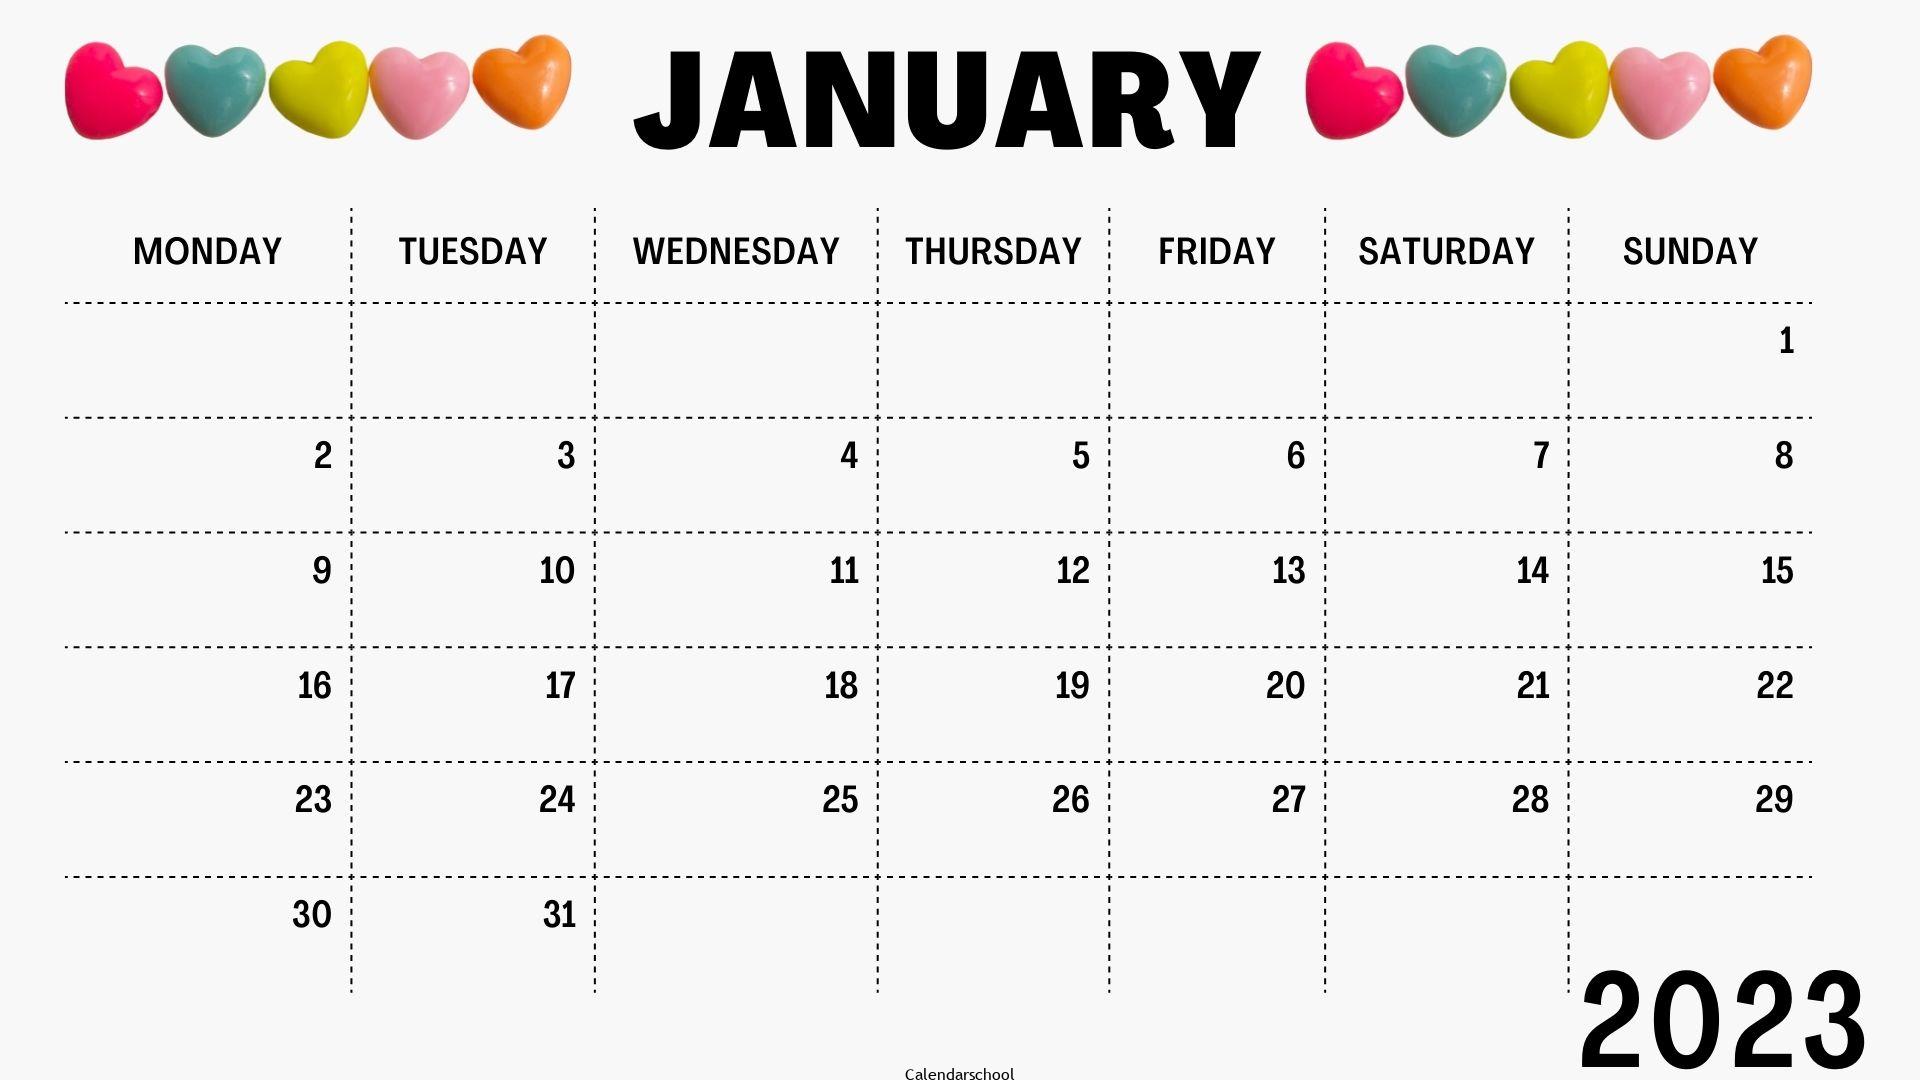 January Calendar 2023 in Spanish